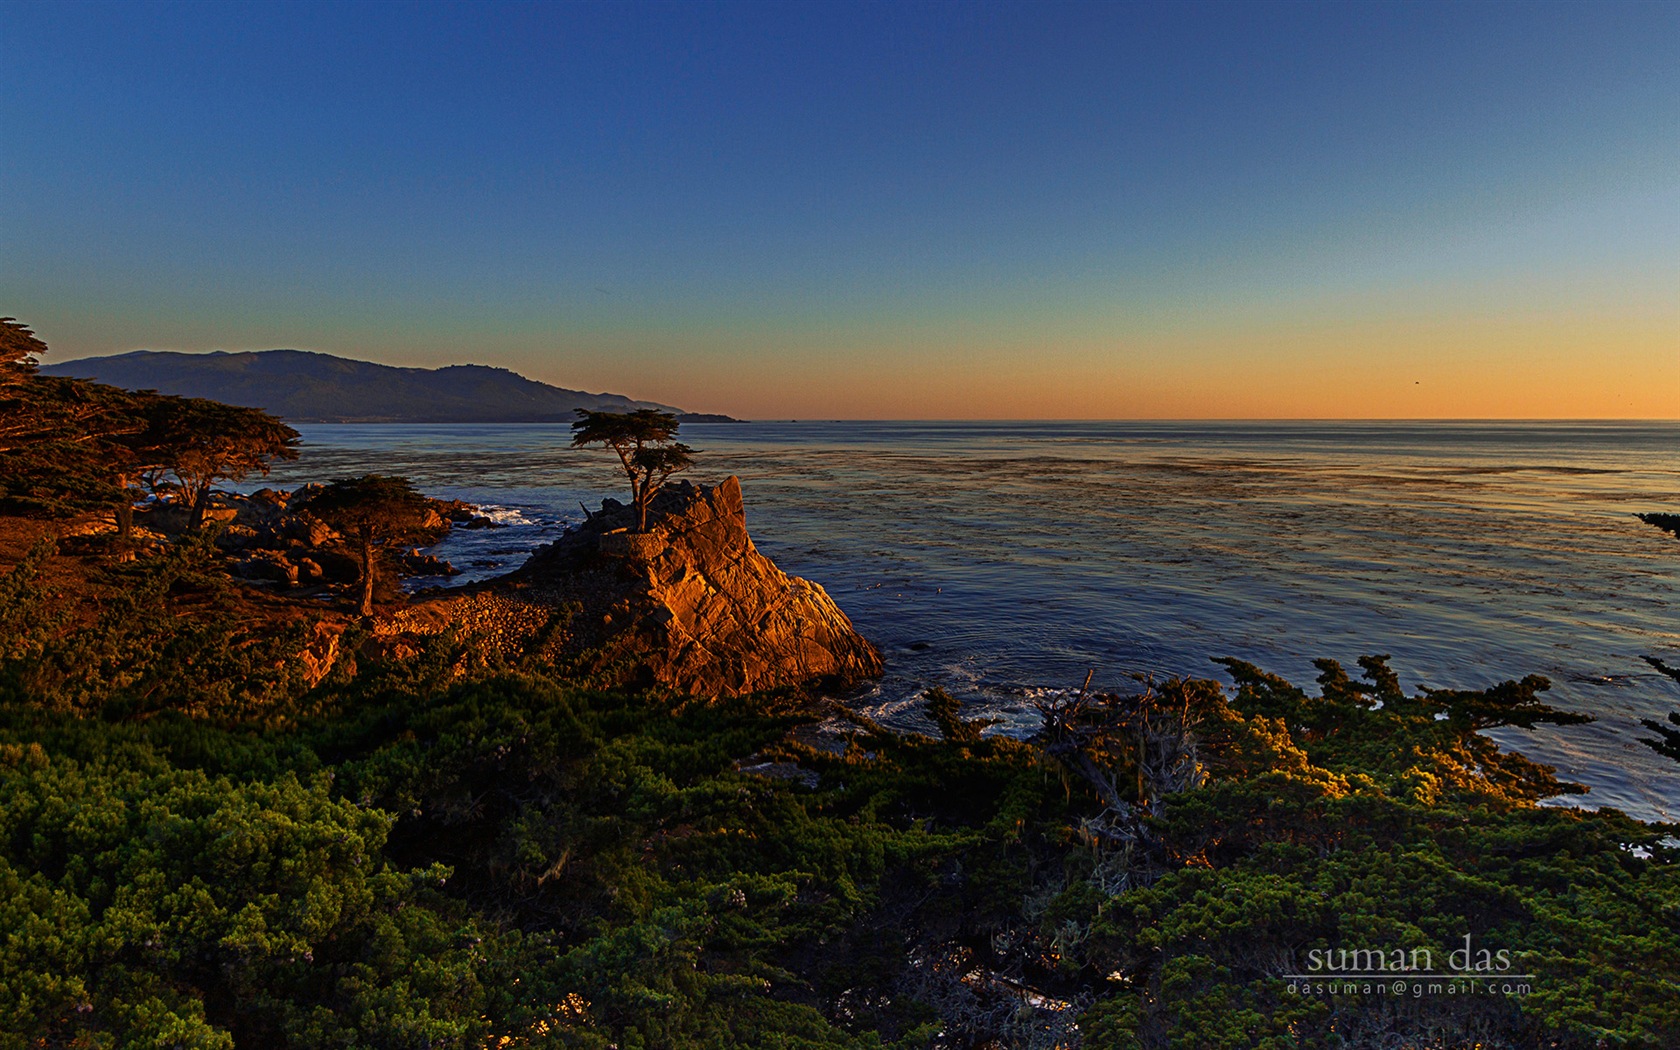 California coastal scenery, Windows 8 theme wallpapers #3 - 1680x1050